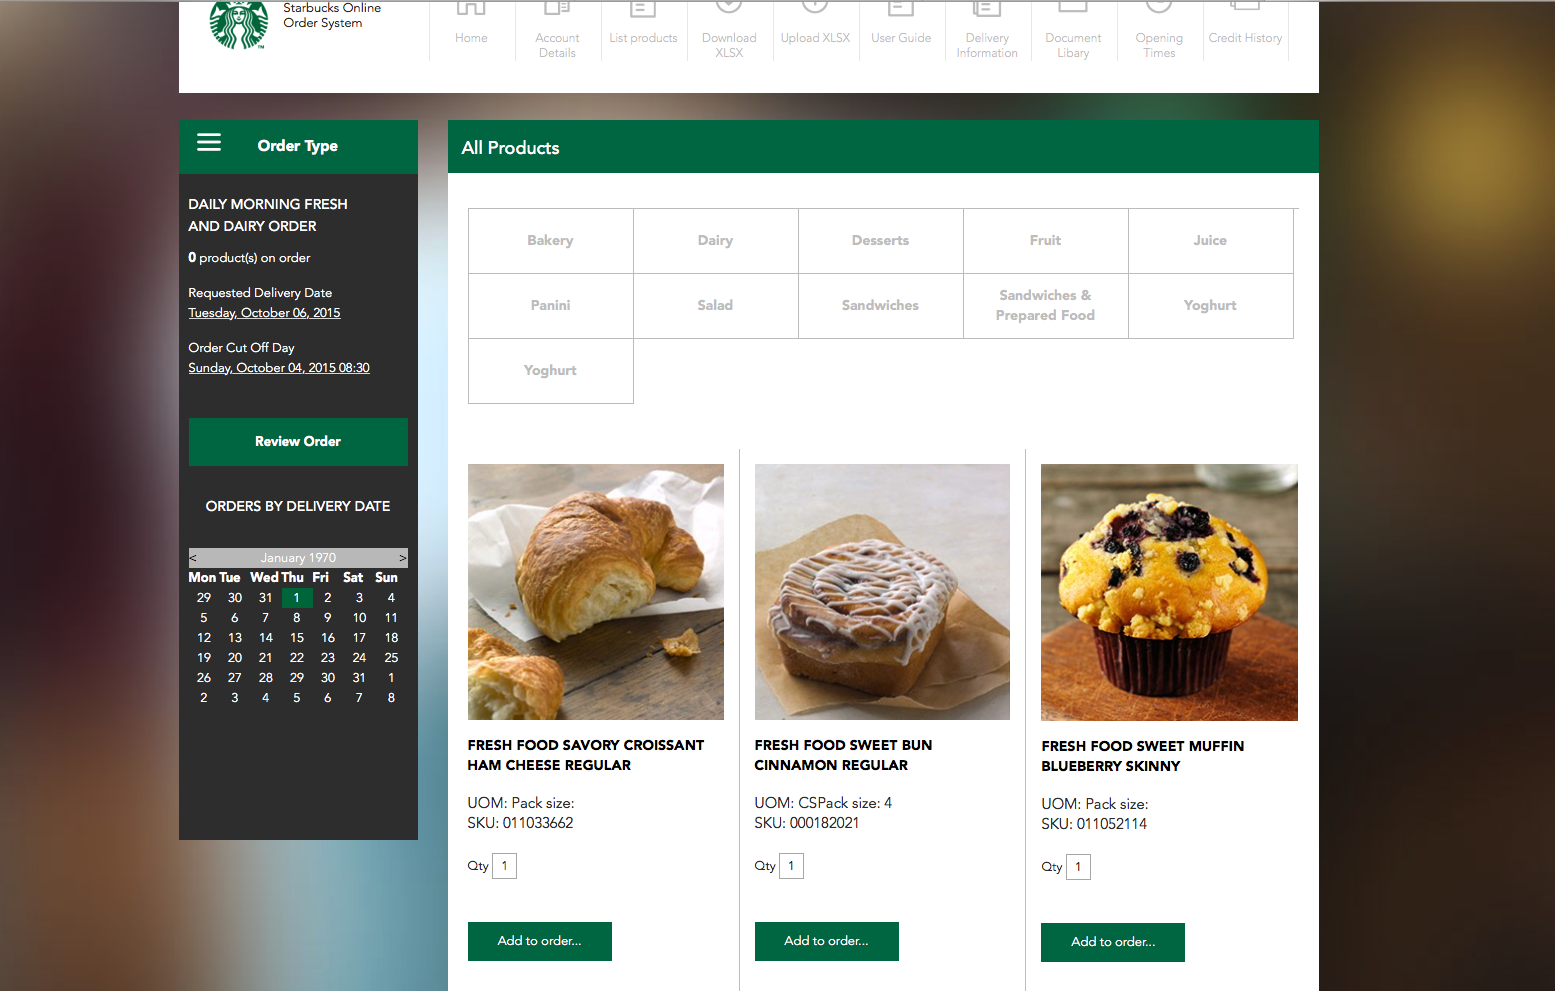 AmRest Starbucks Online Order System Customer Login